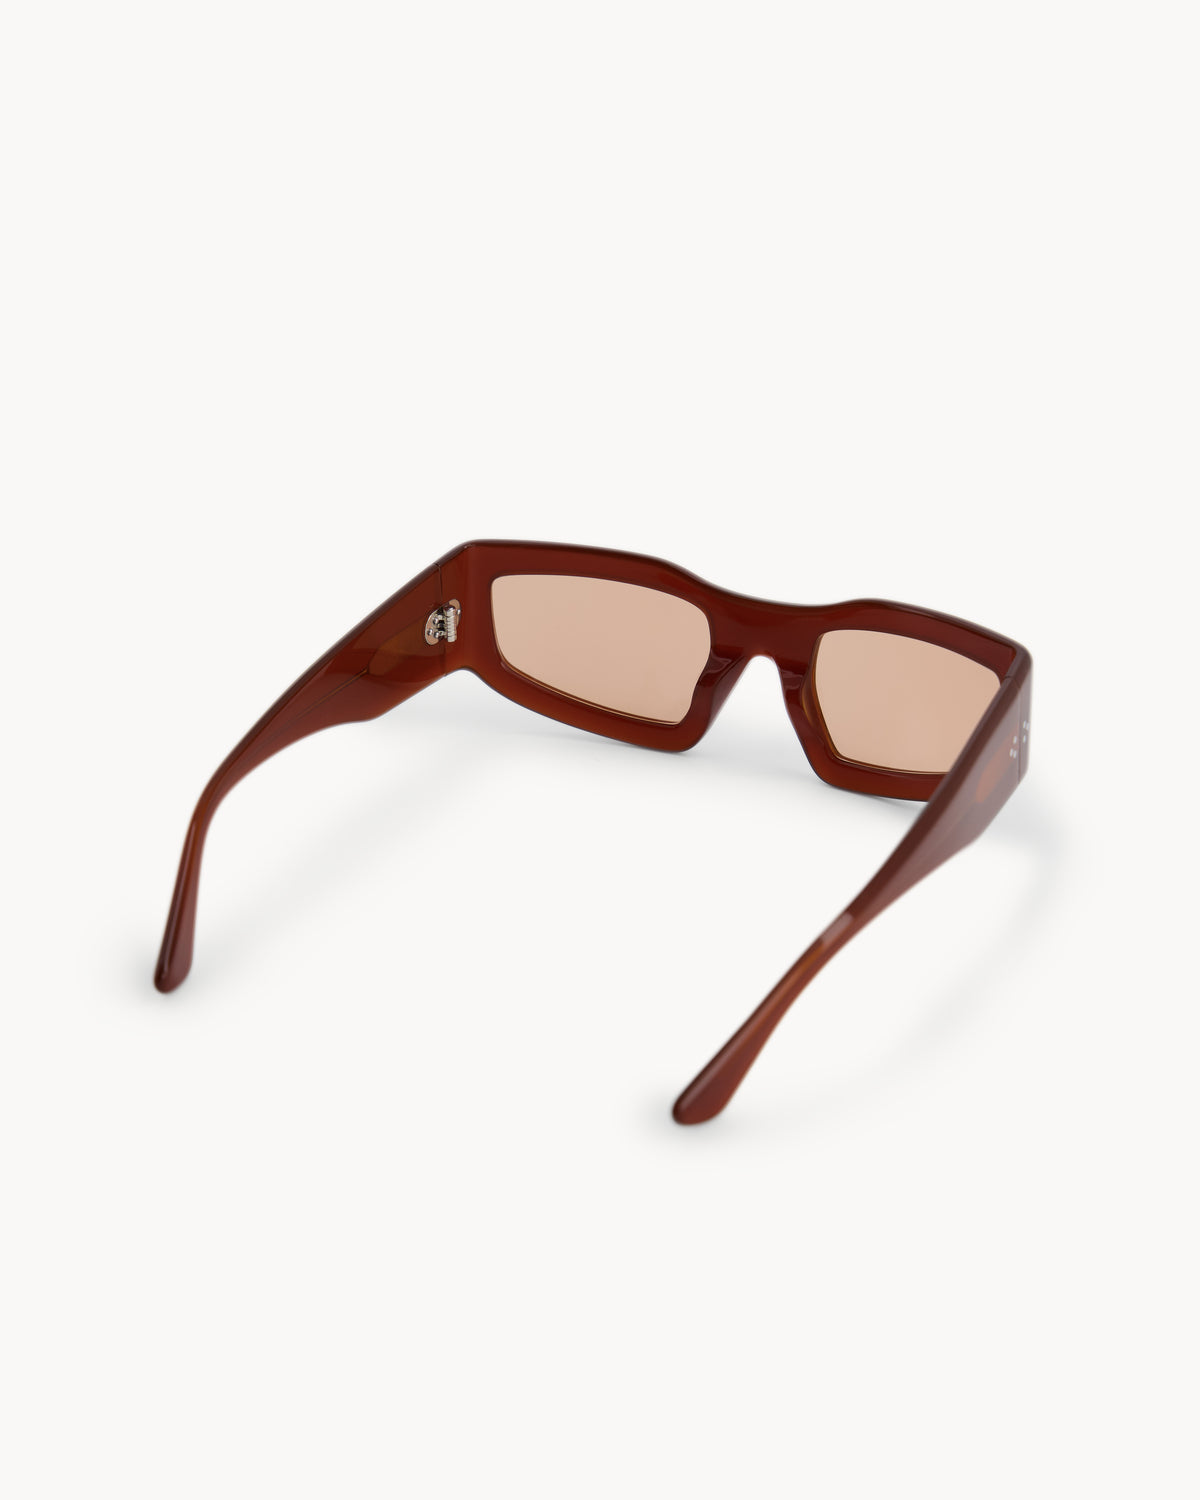 Port Tanger Andalucia Sunglasses in Terracotta Acetate and Amber Lenses 3